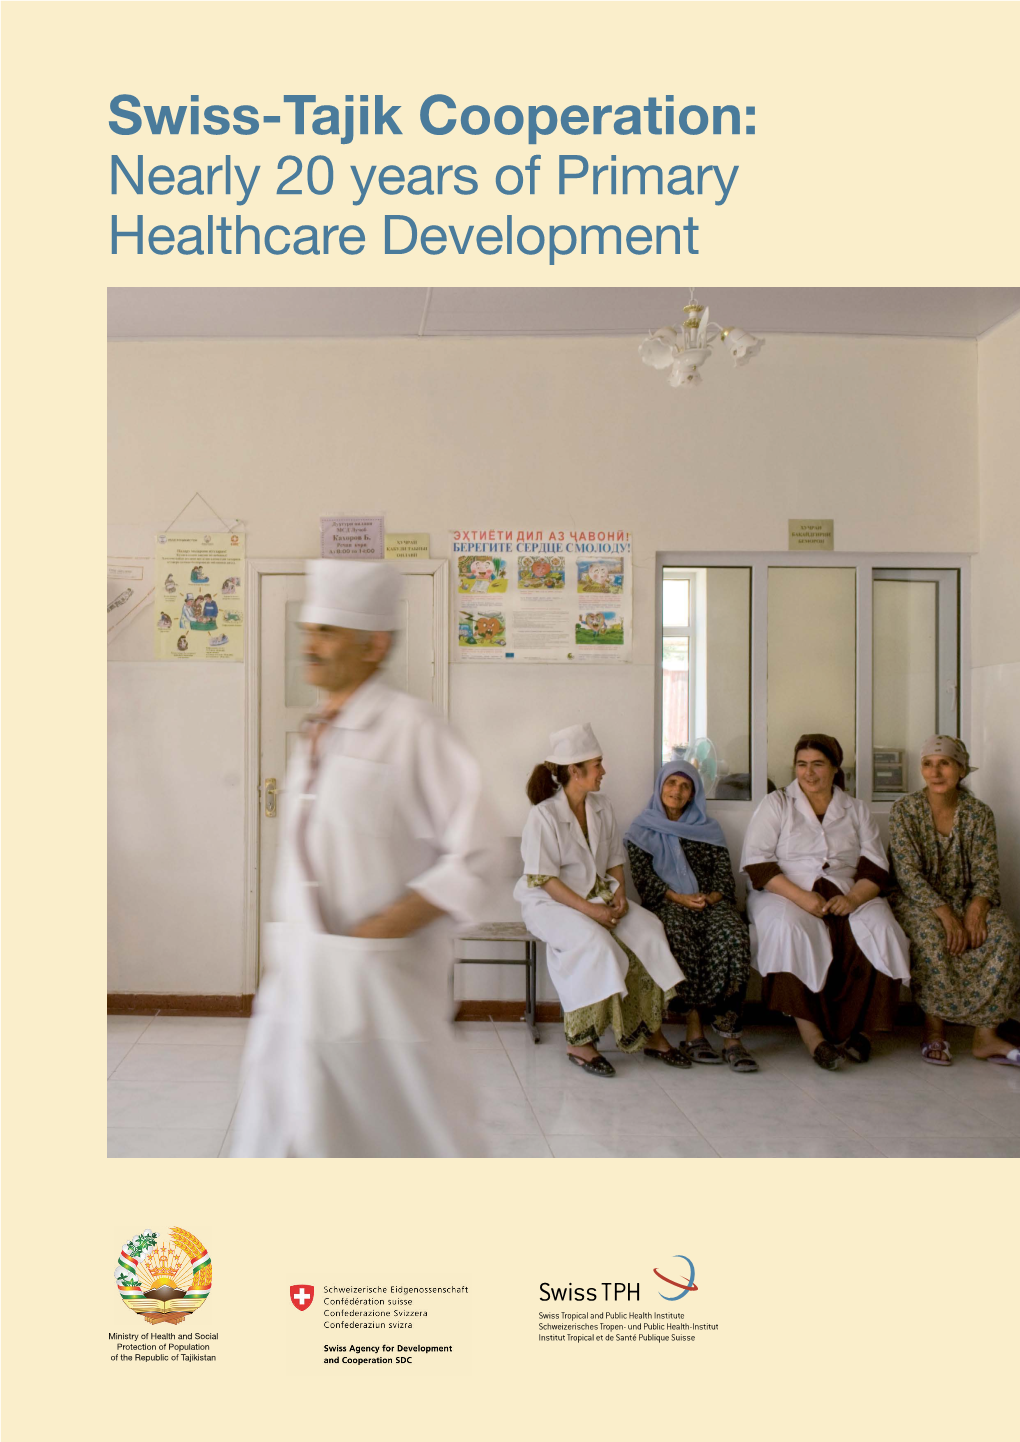 Swiss-Tajik Cooperation: Nearly 20 Years of Primary Healthcare Development